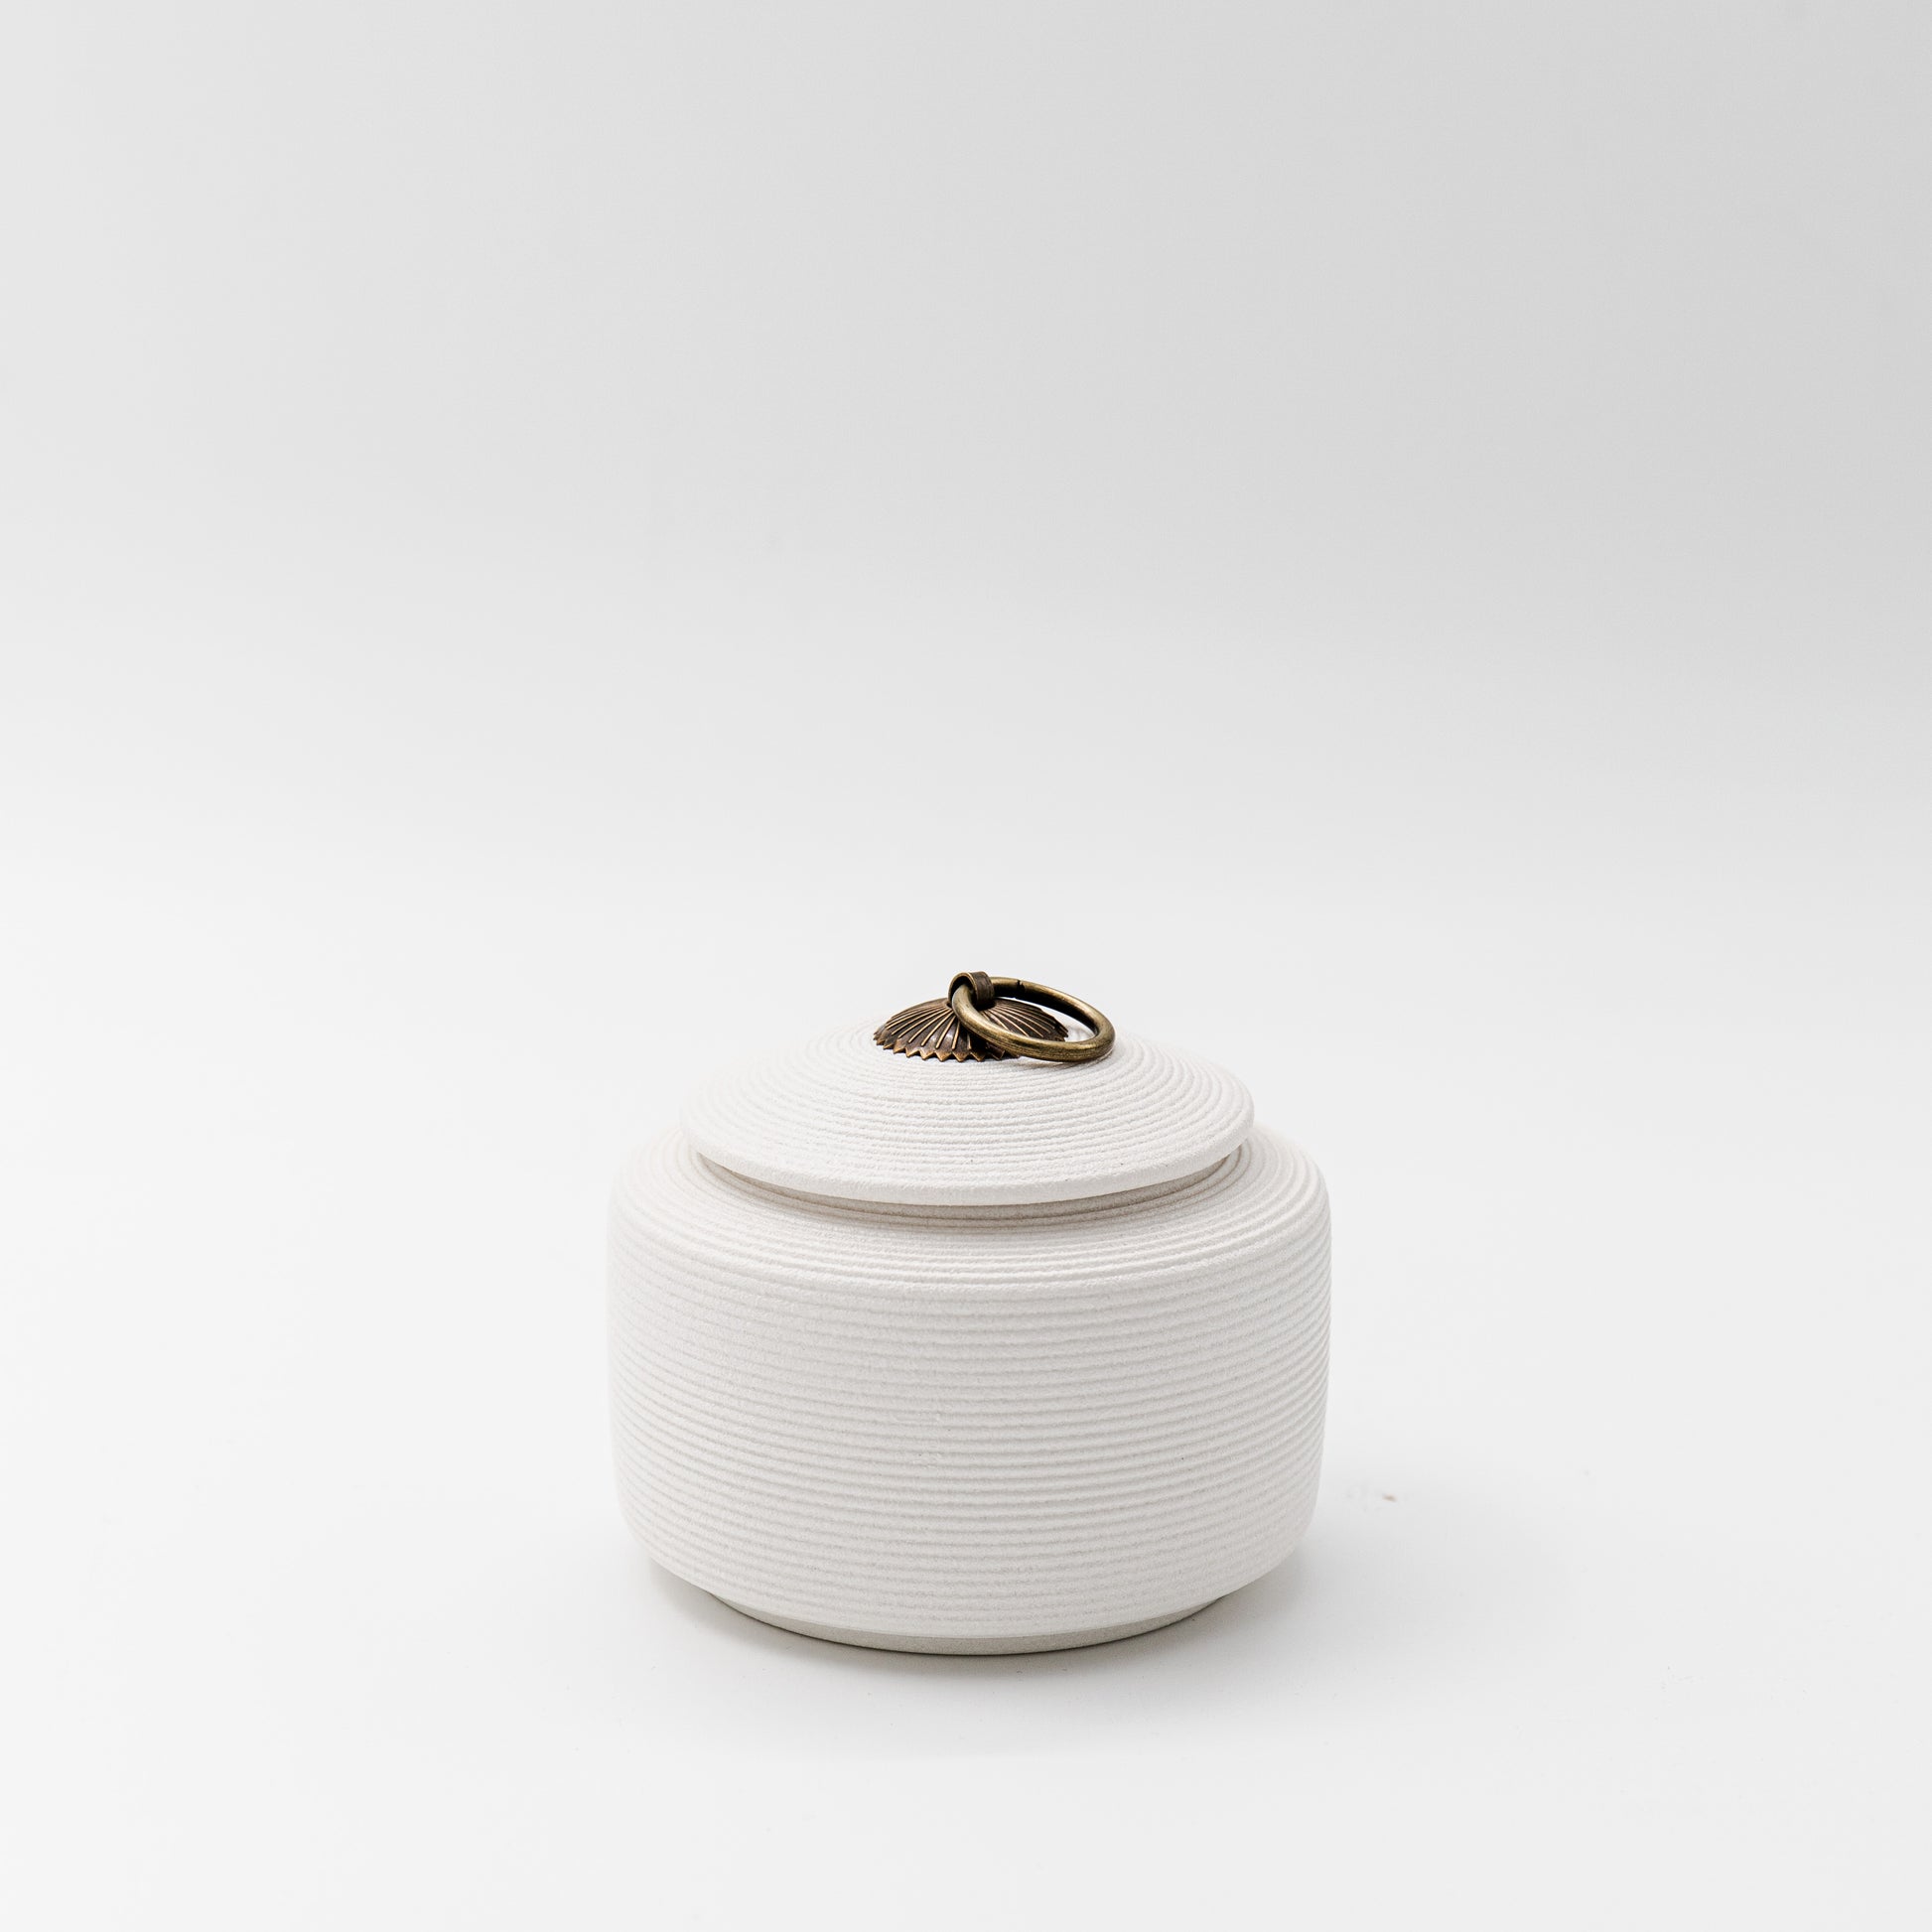  kleine witte oosterse keramische urn voor mens en dier hond kat